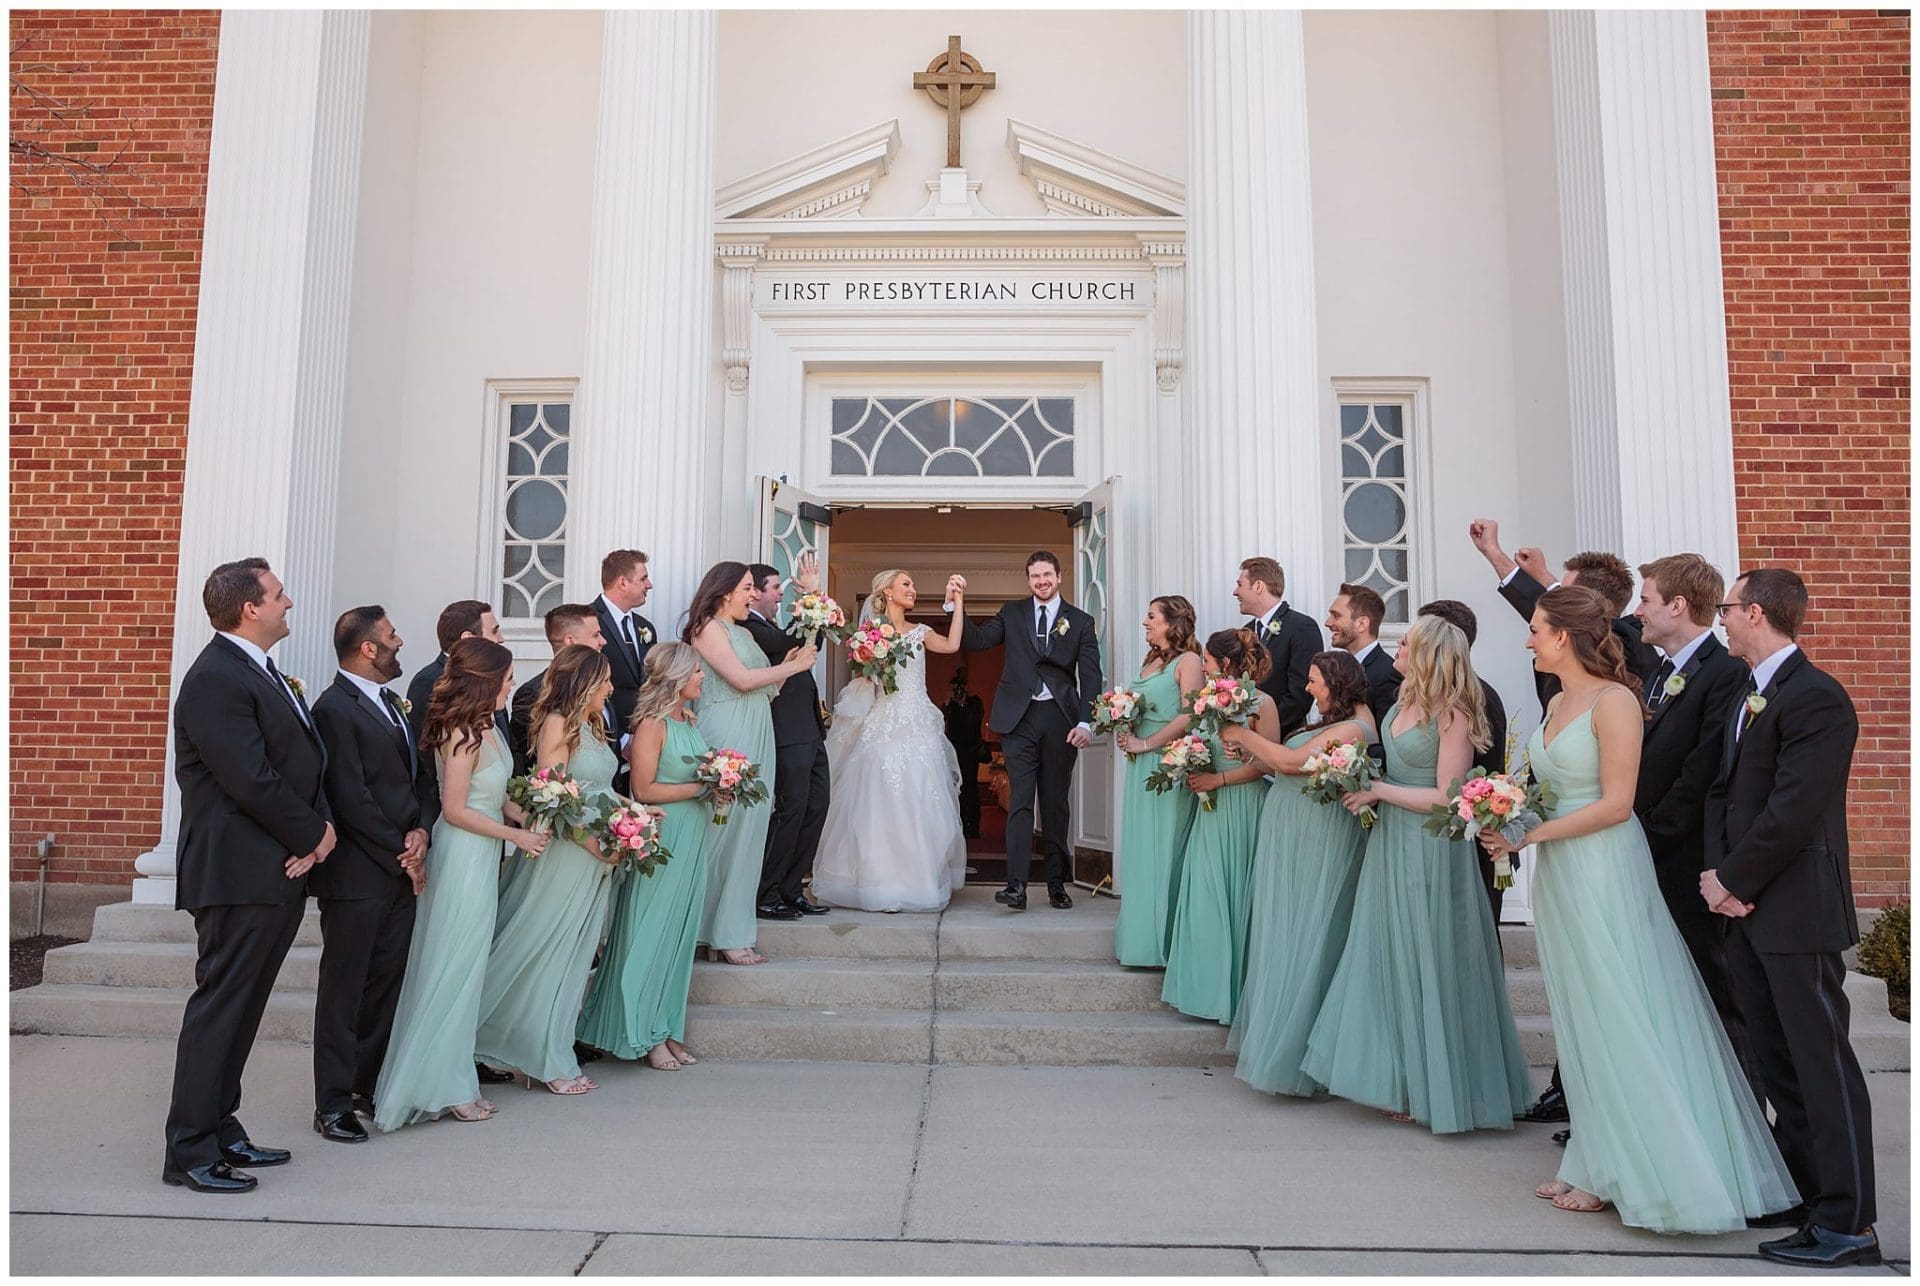 First Presbyterian Church of Arlington Heights Wedding - Wes Craft Photography